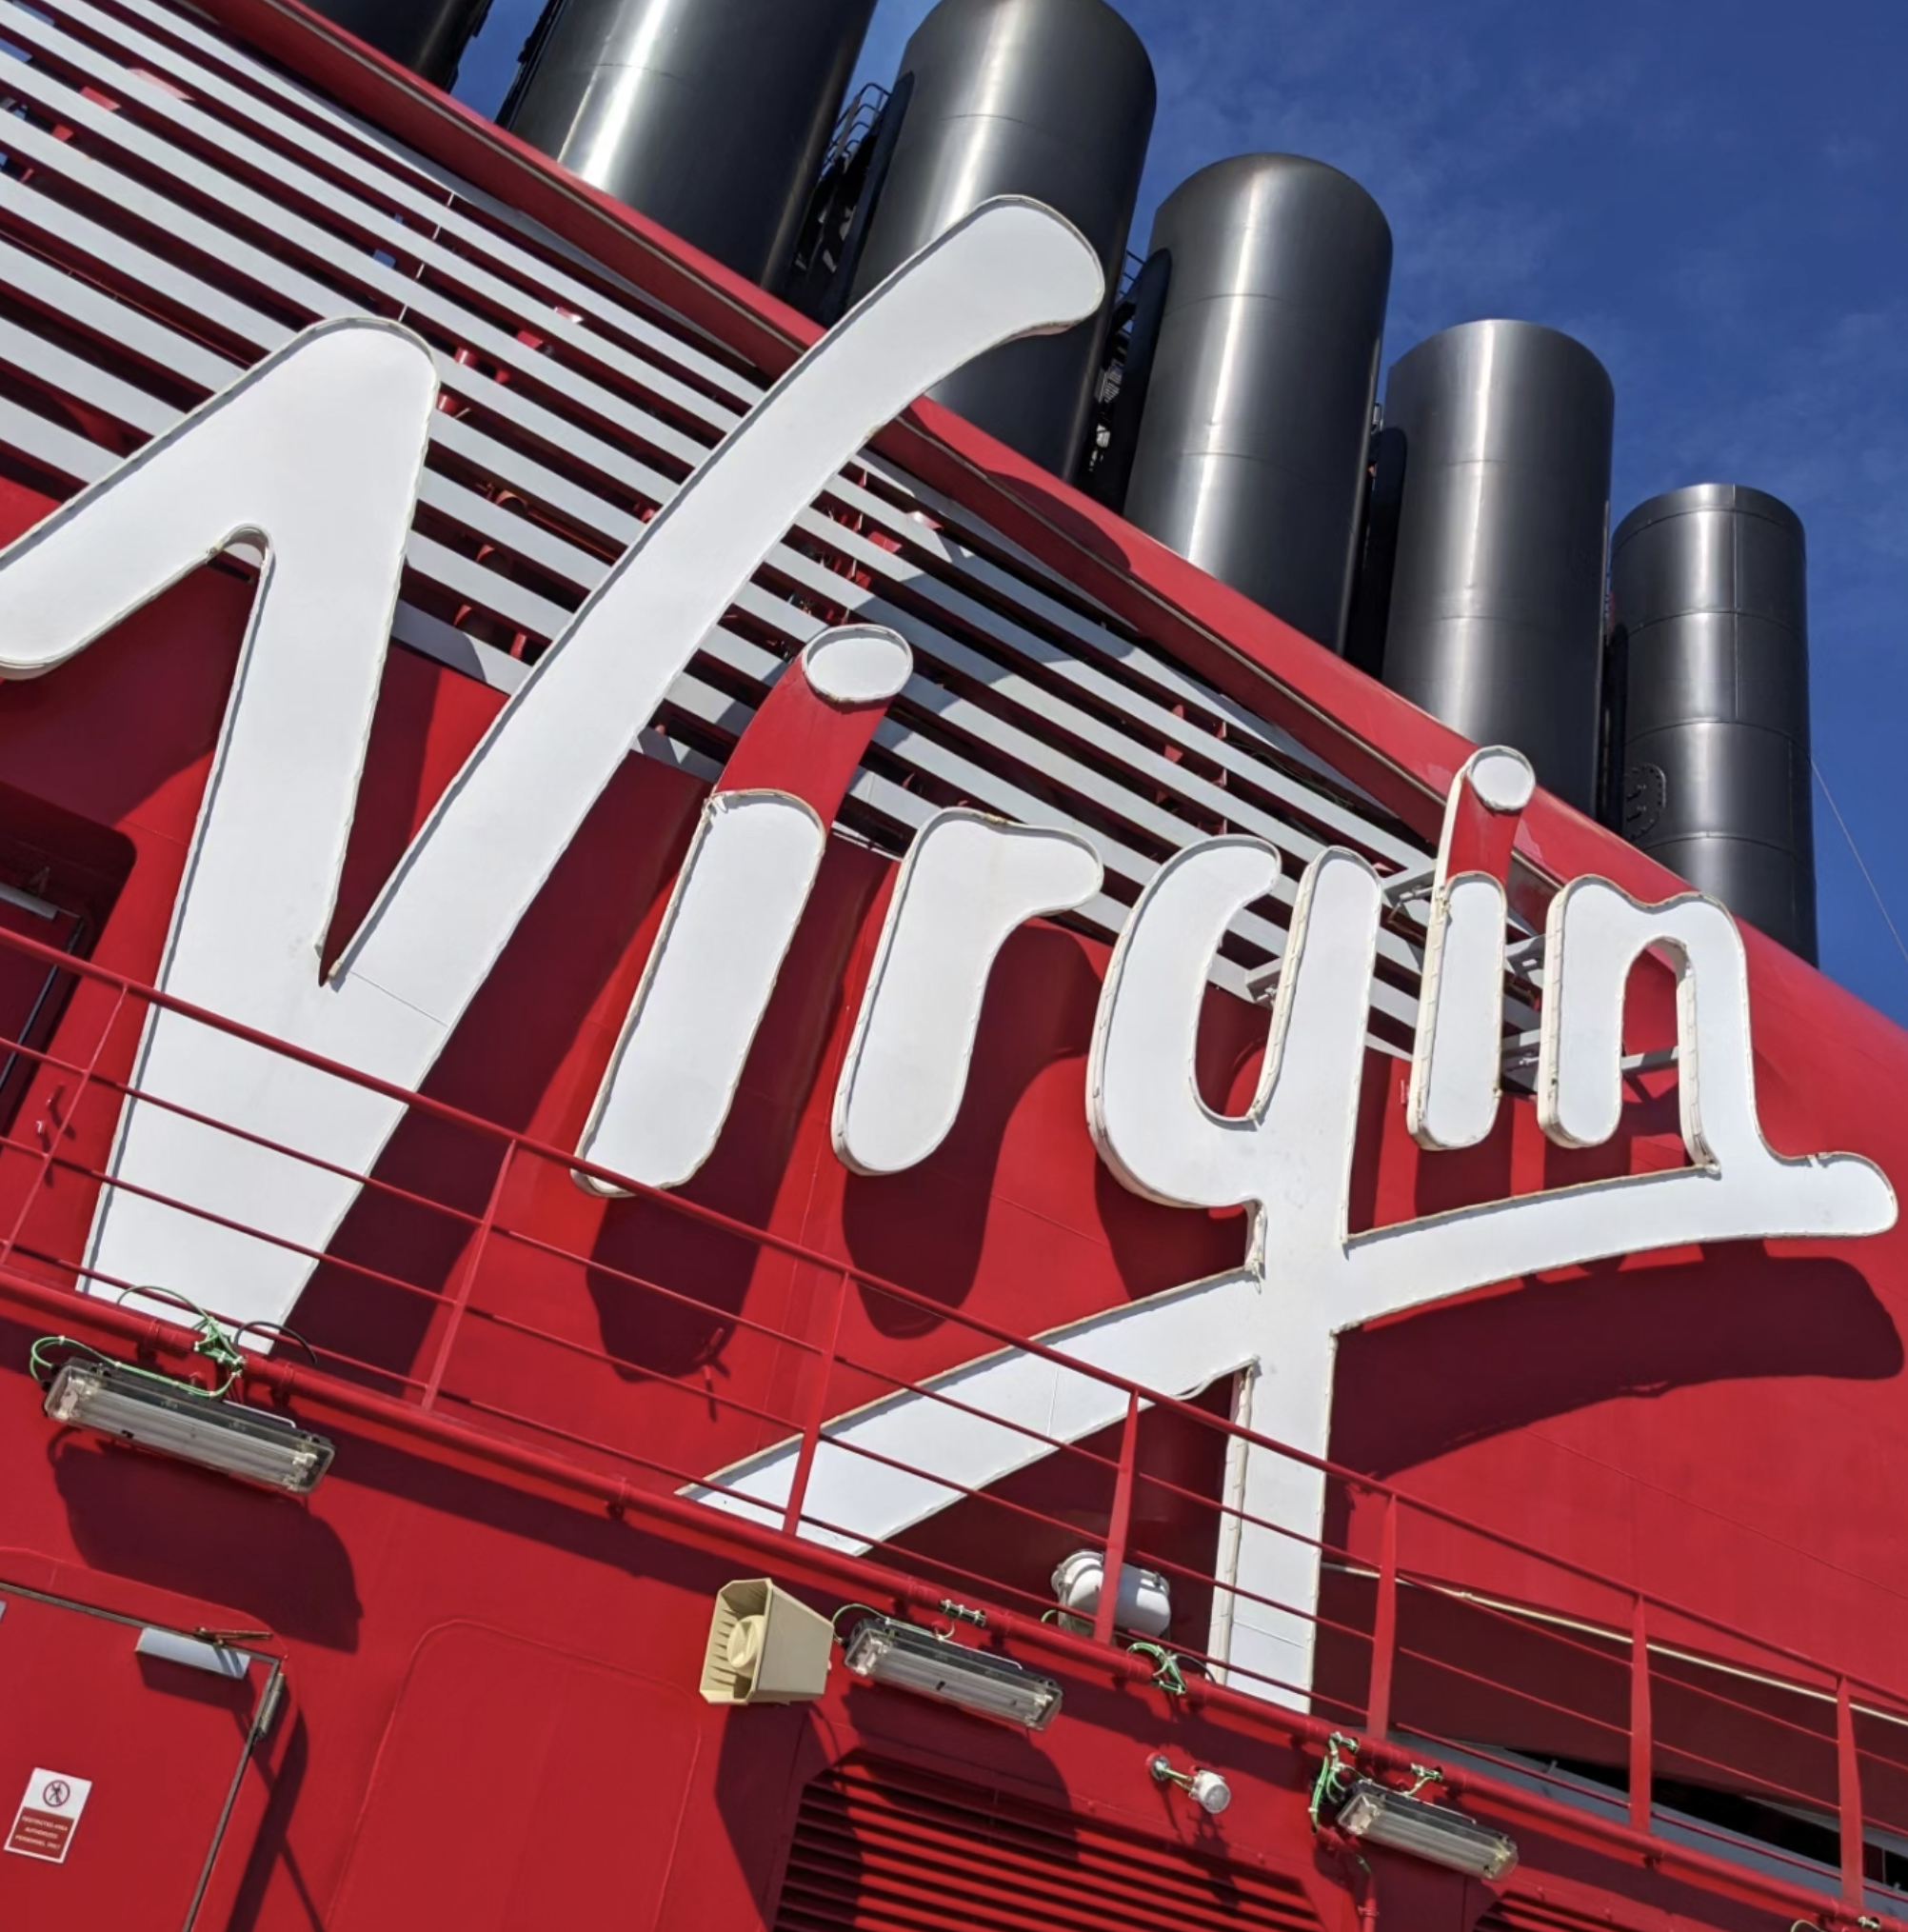 Virgin Cruises December Promotion